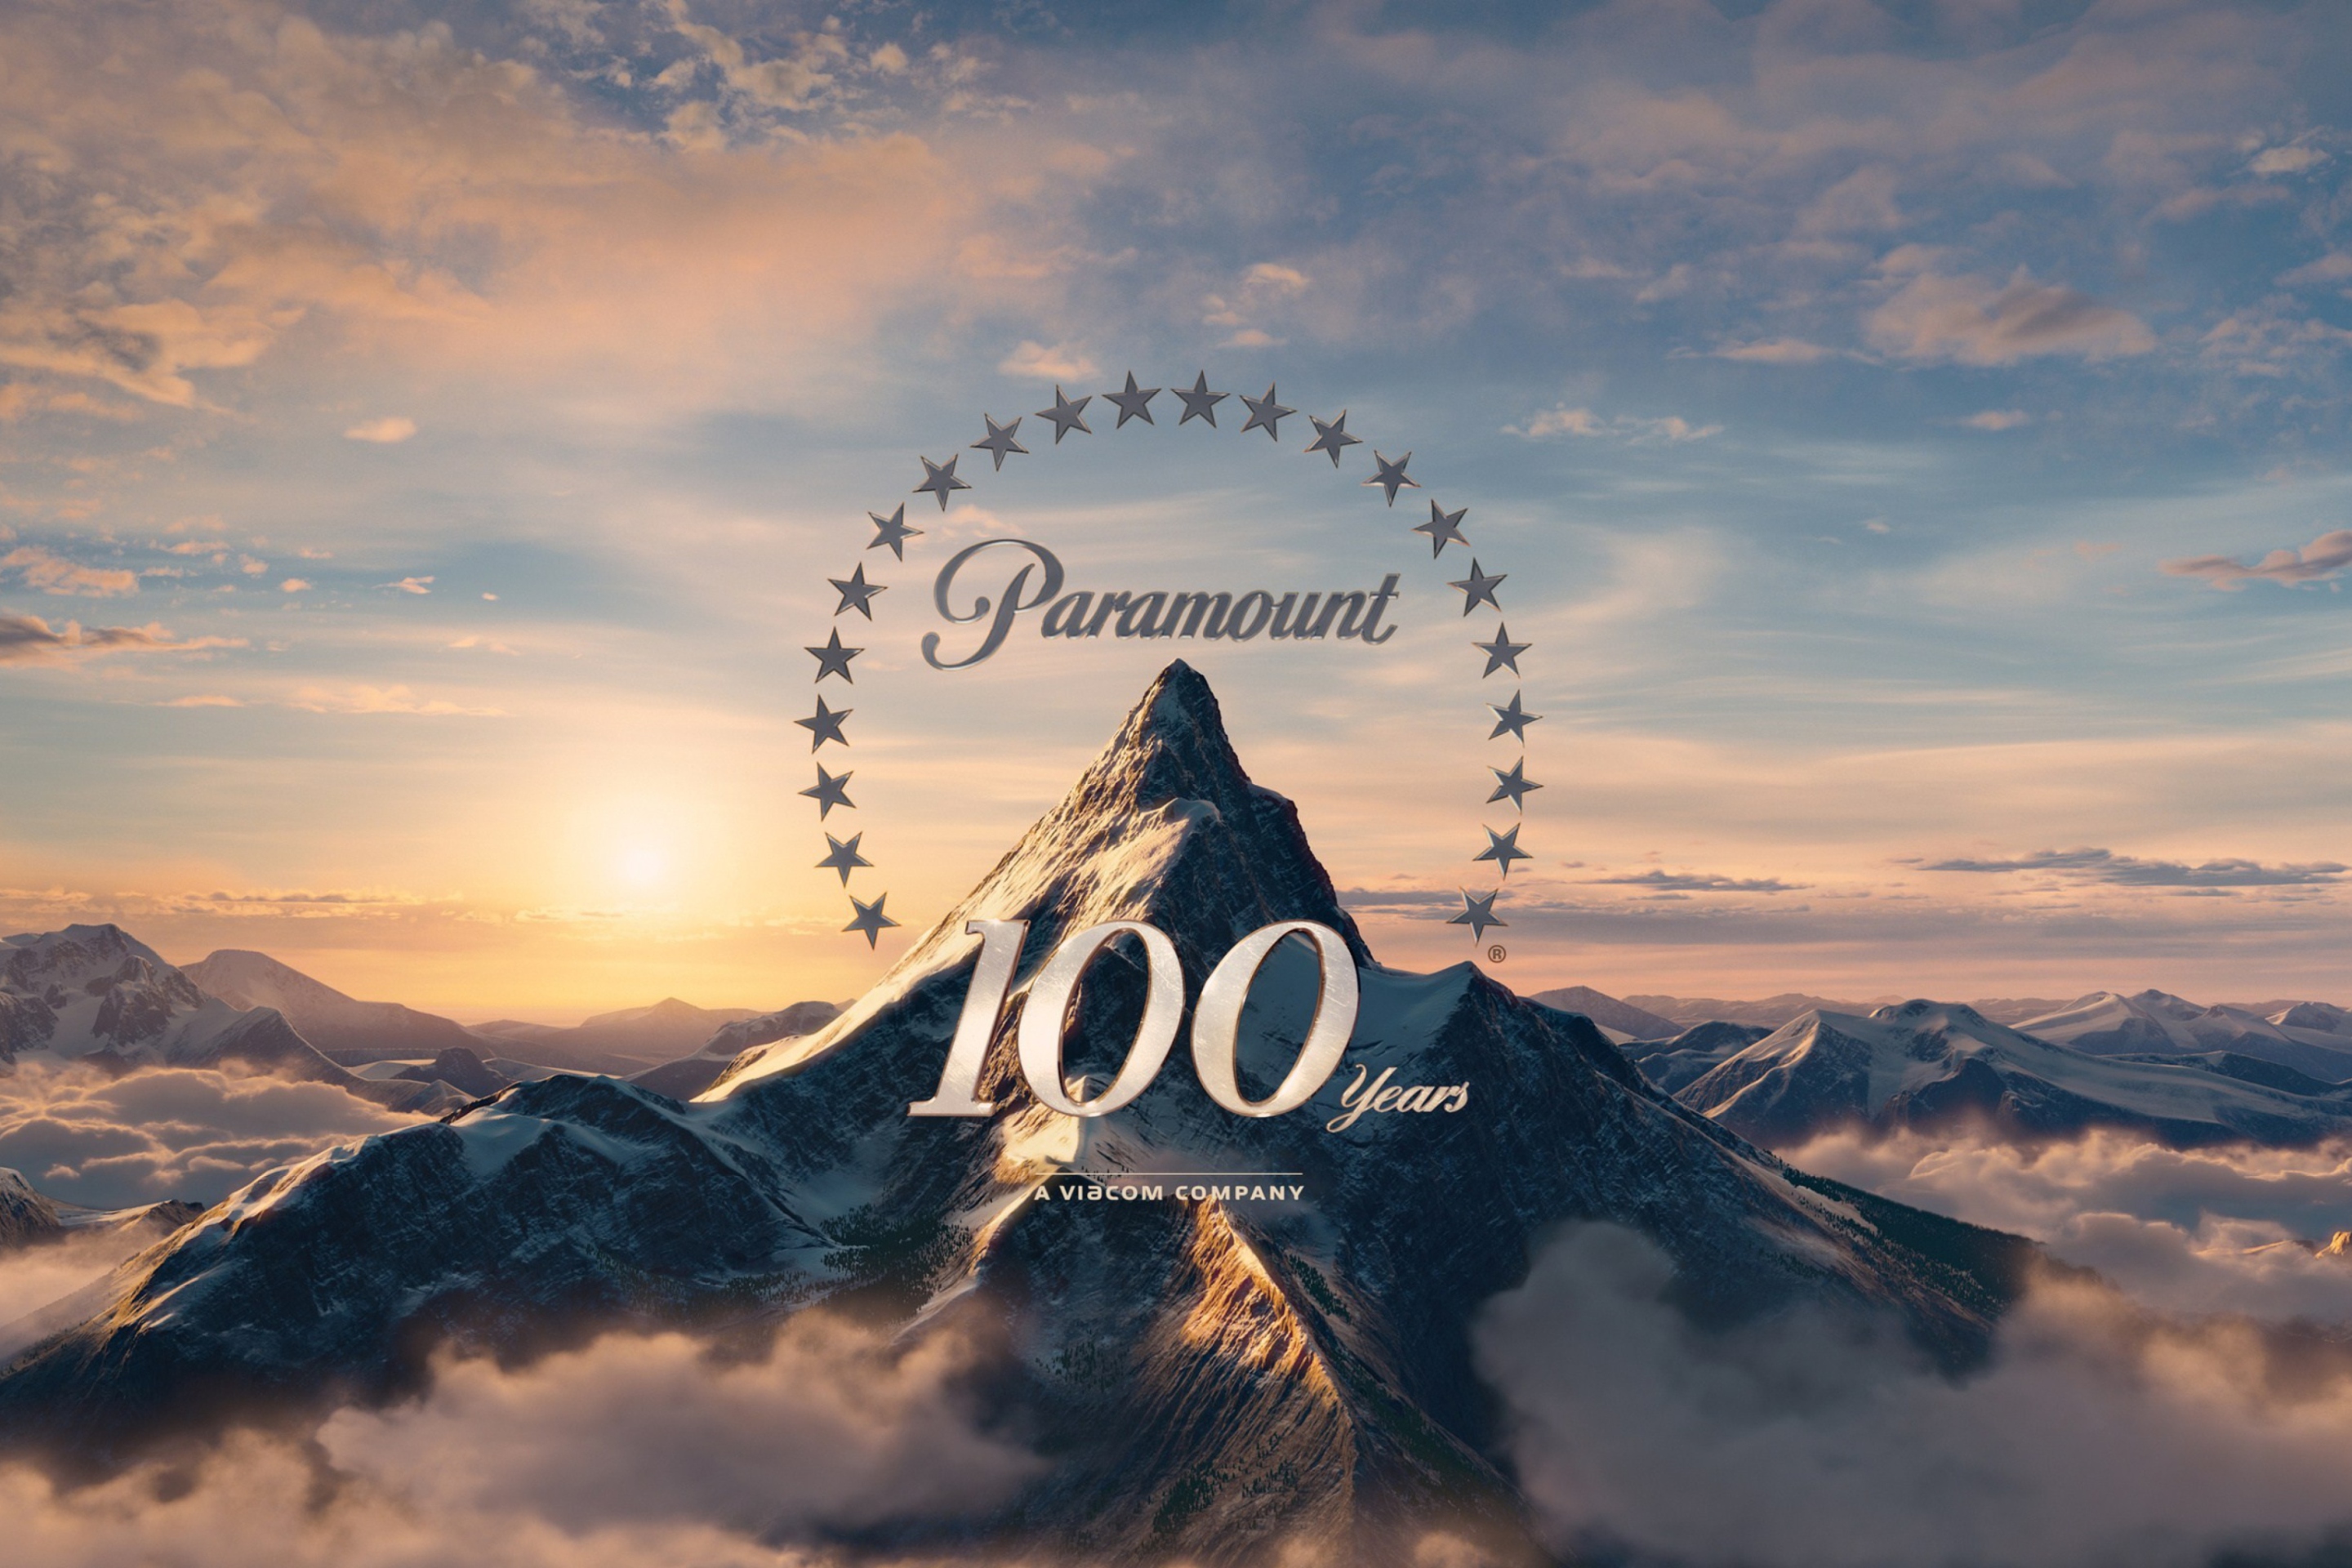 Fondo de pantalla Paramount Pictures 100 Years 2880x1920